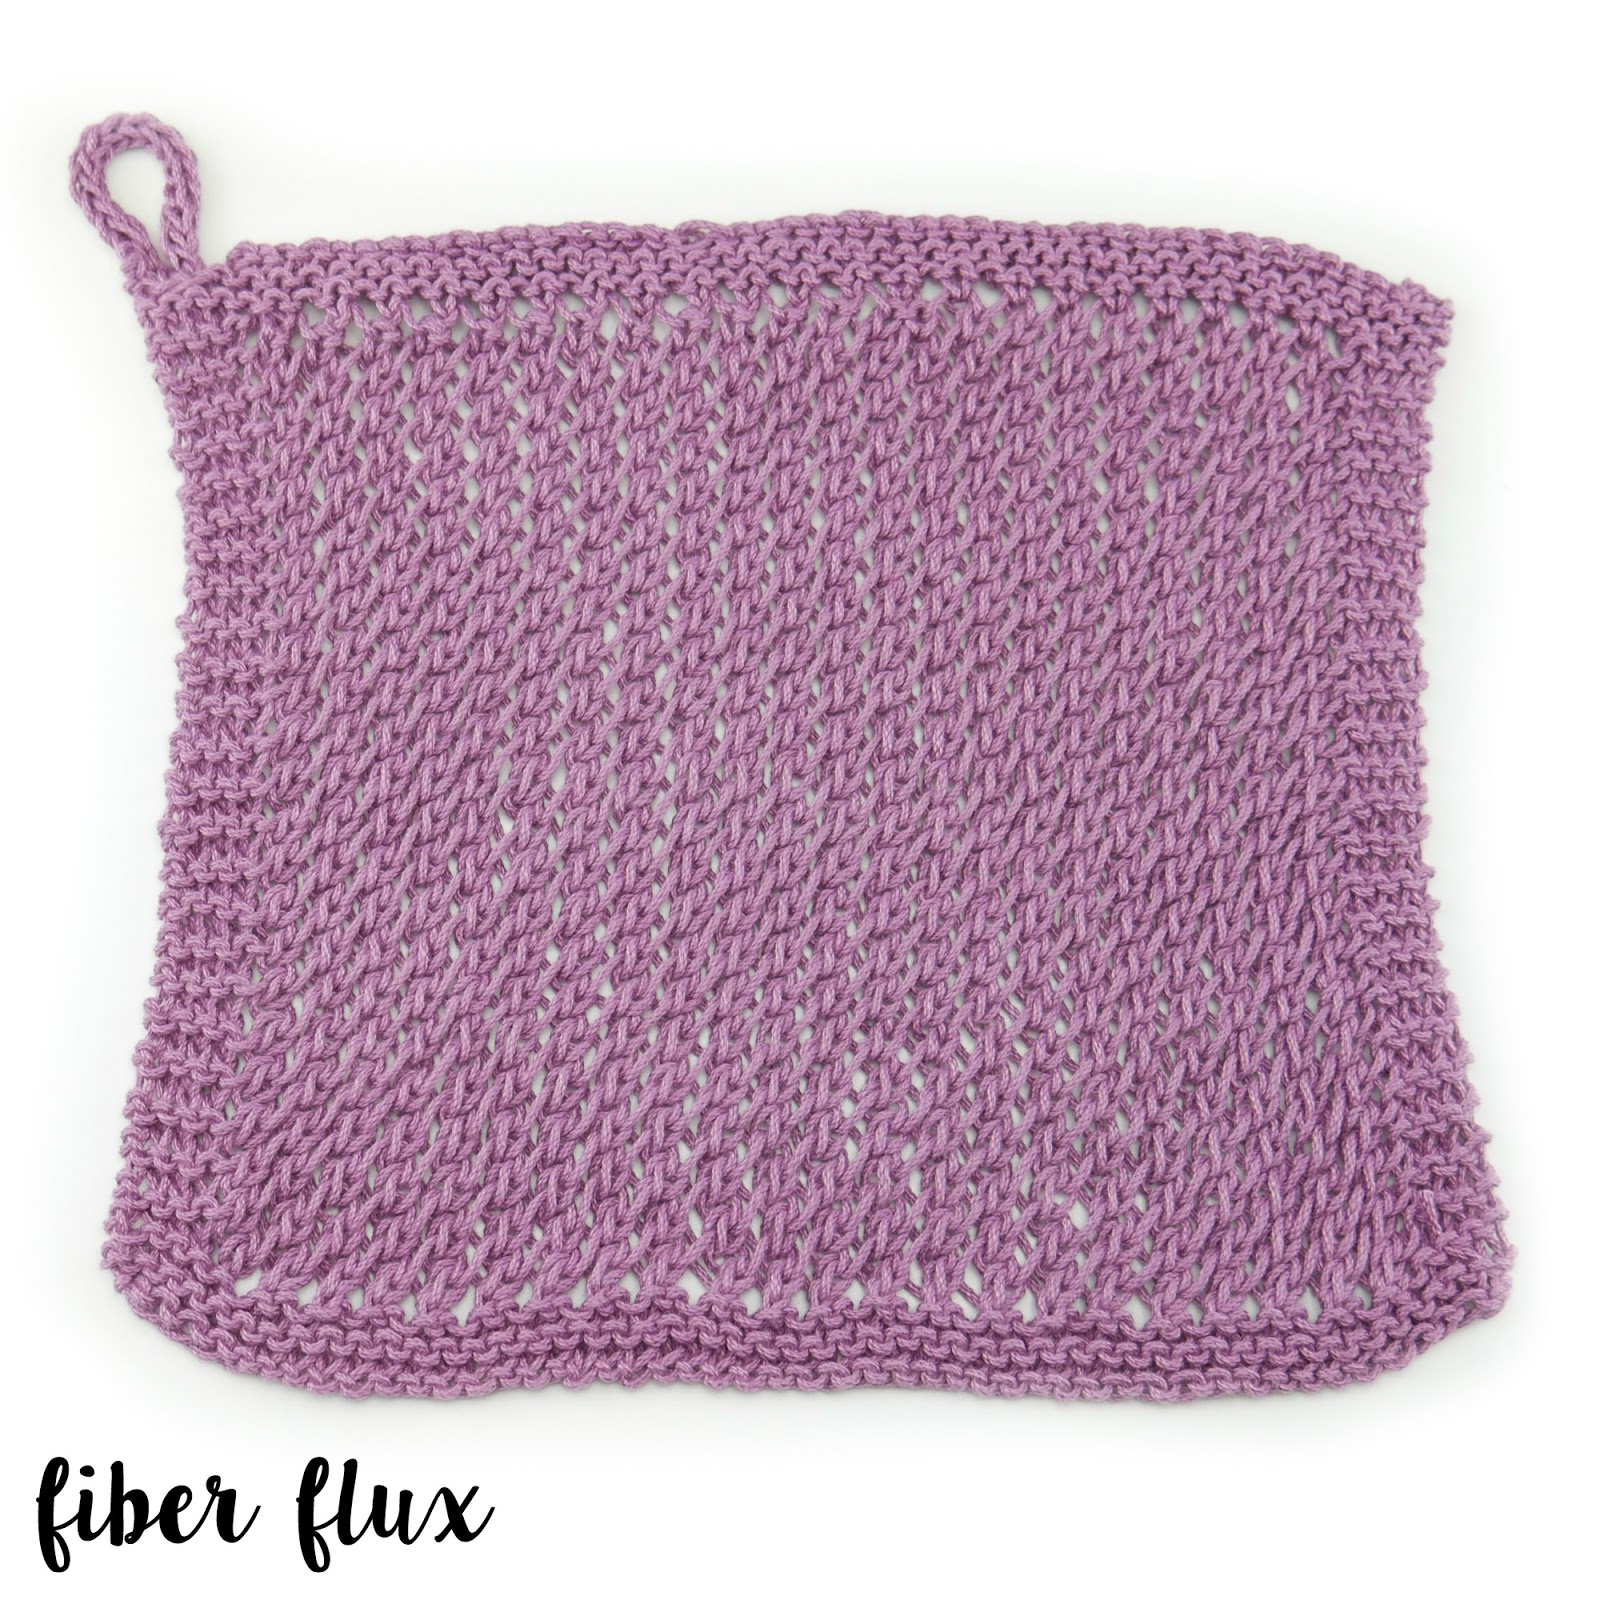 Easy Dishcloth Knit Pattern Fiber Flux Free Knitting Patterntextured Lace Dishcloth